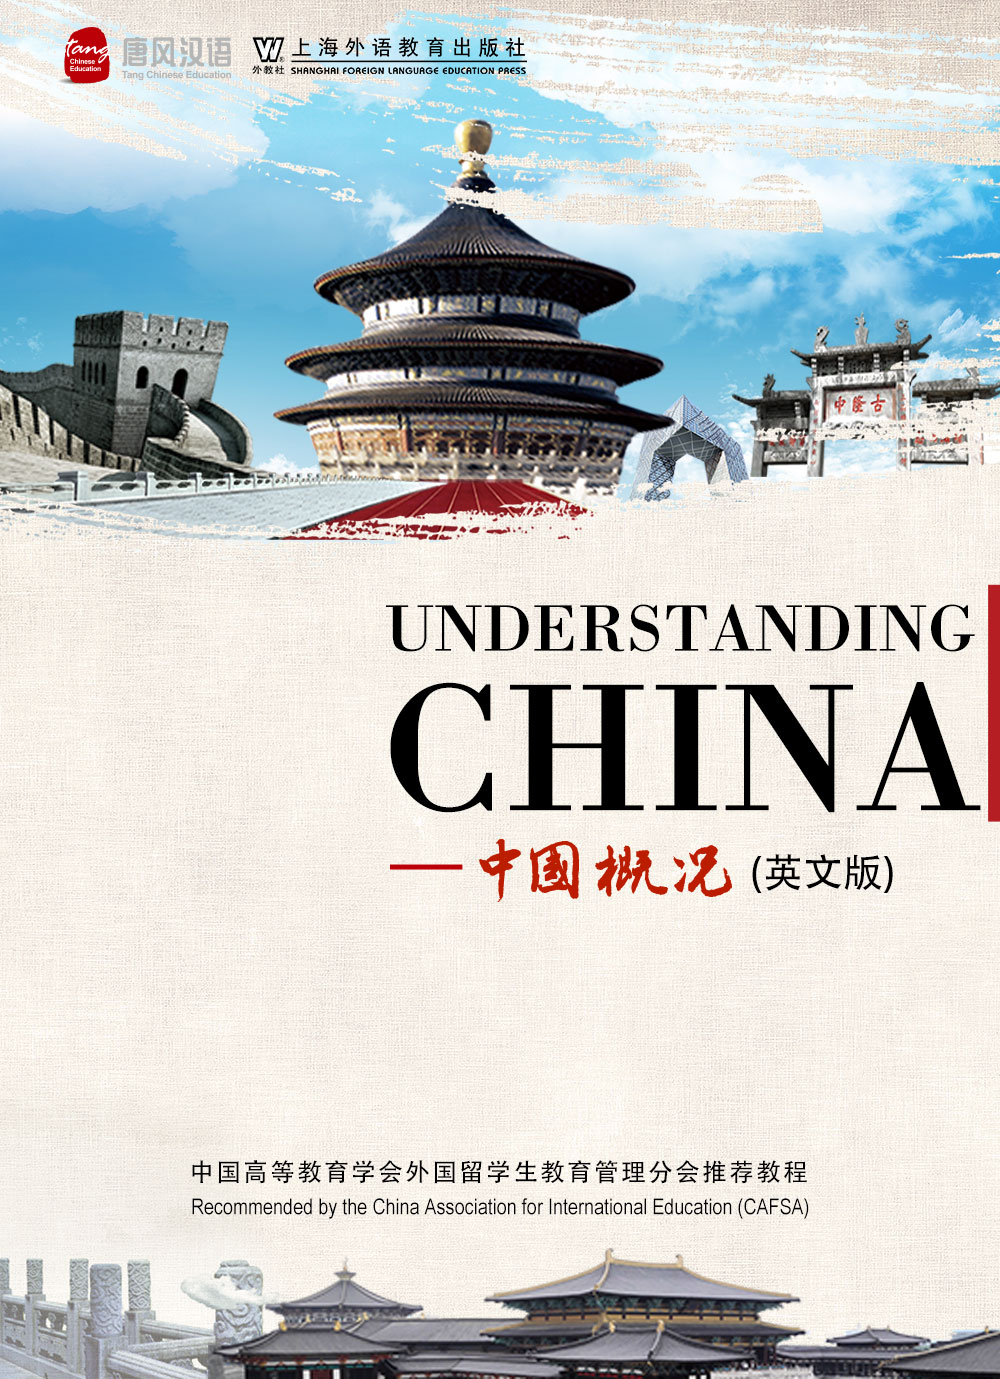 UNDERSTANDING CHINA (中国概况英文版)